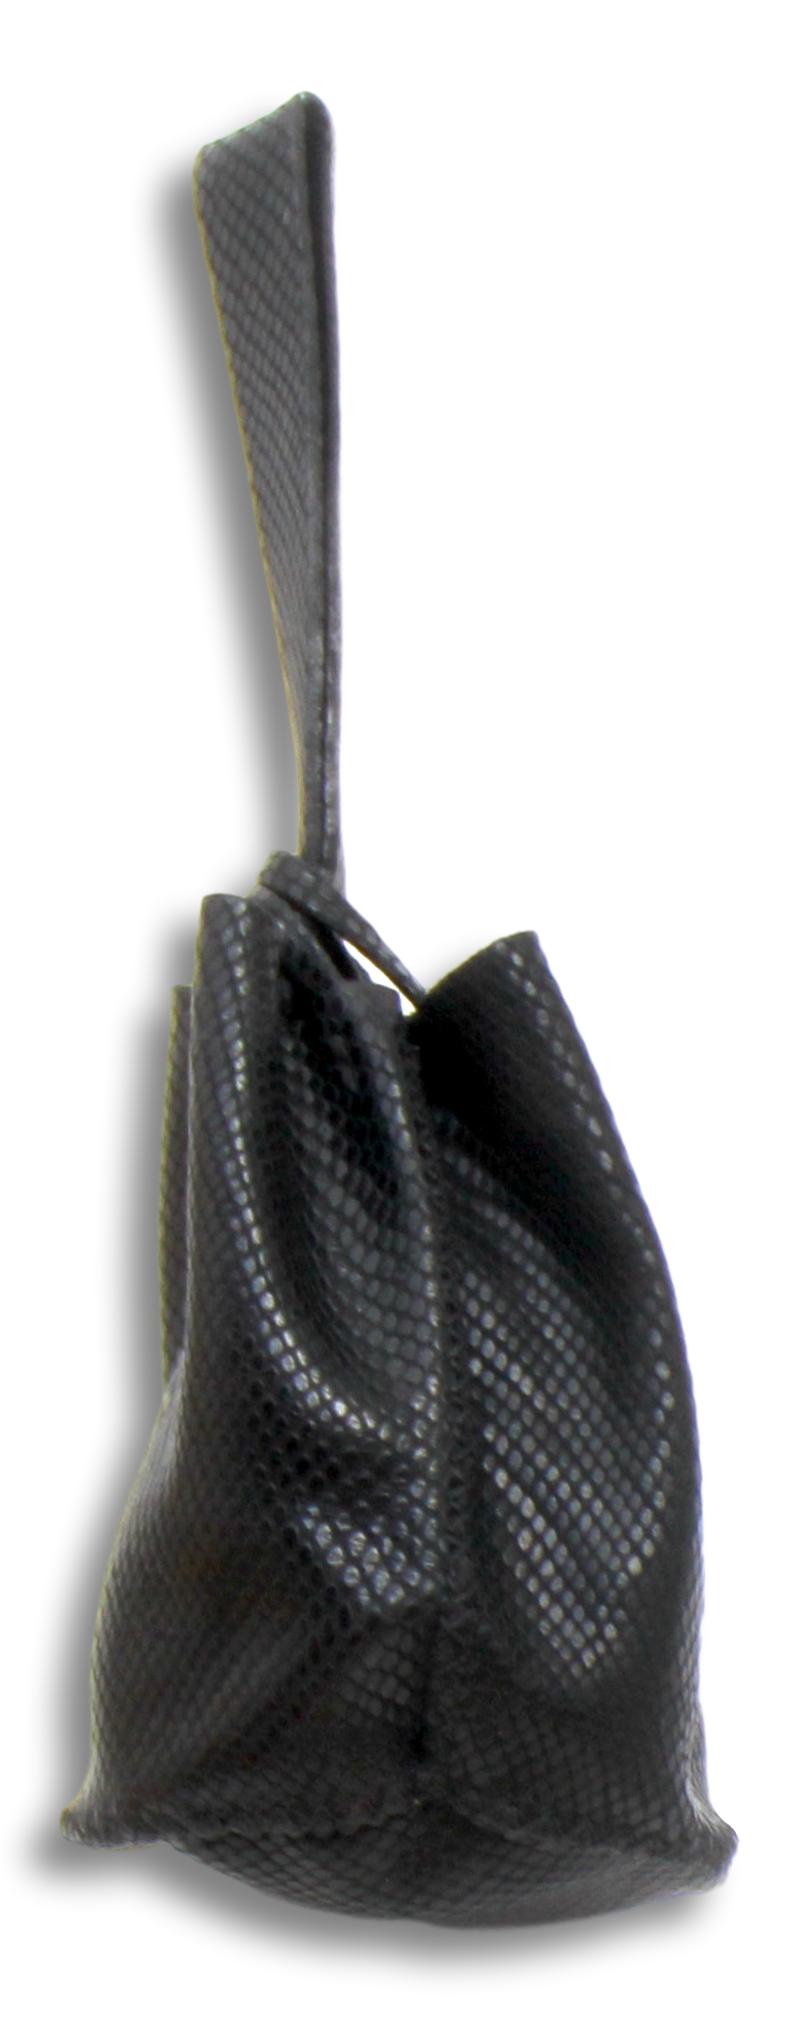 Volta leather handbag